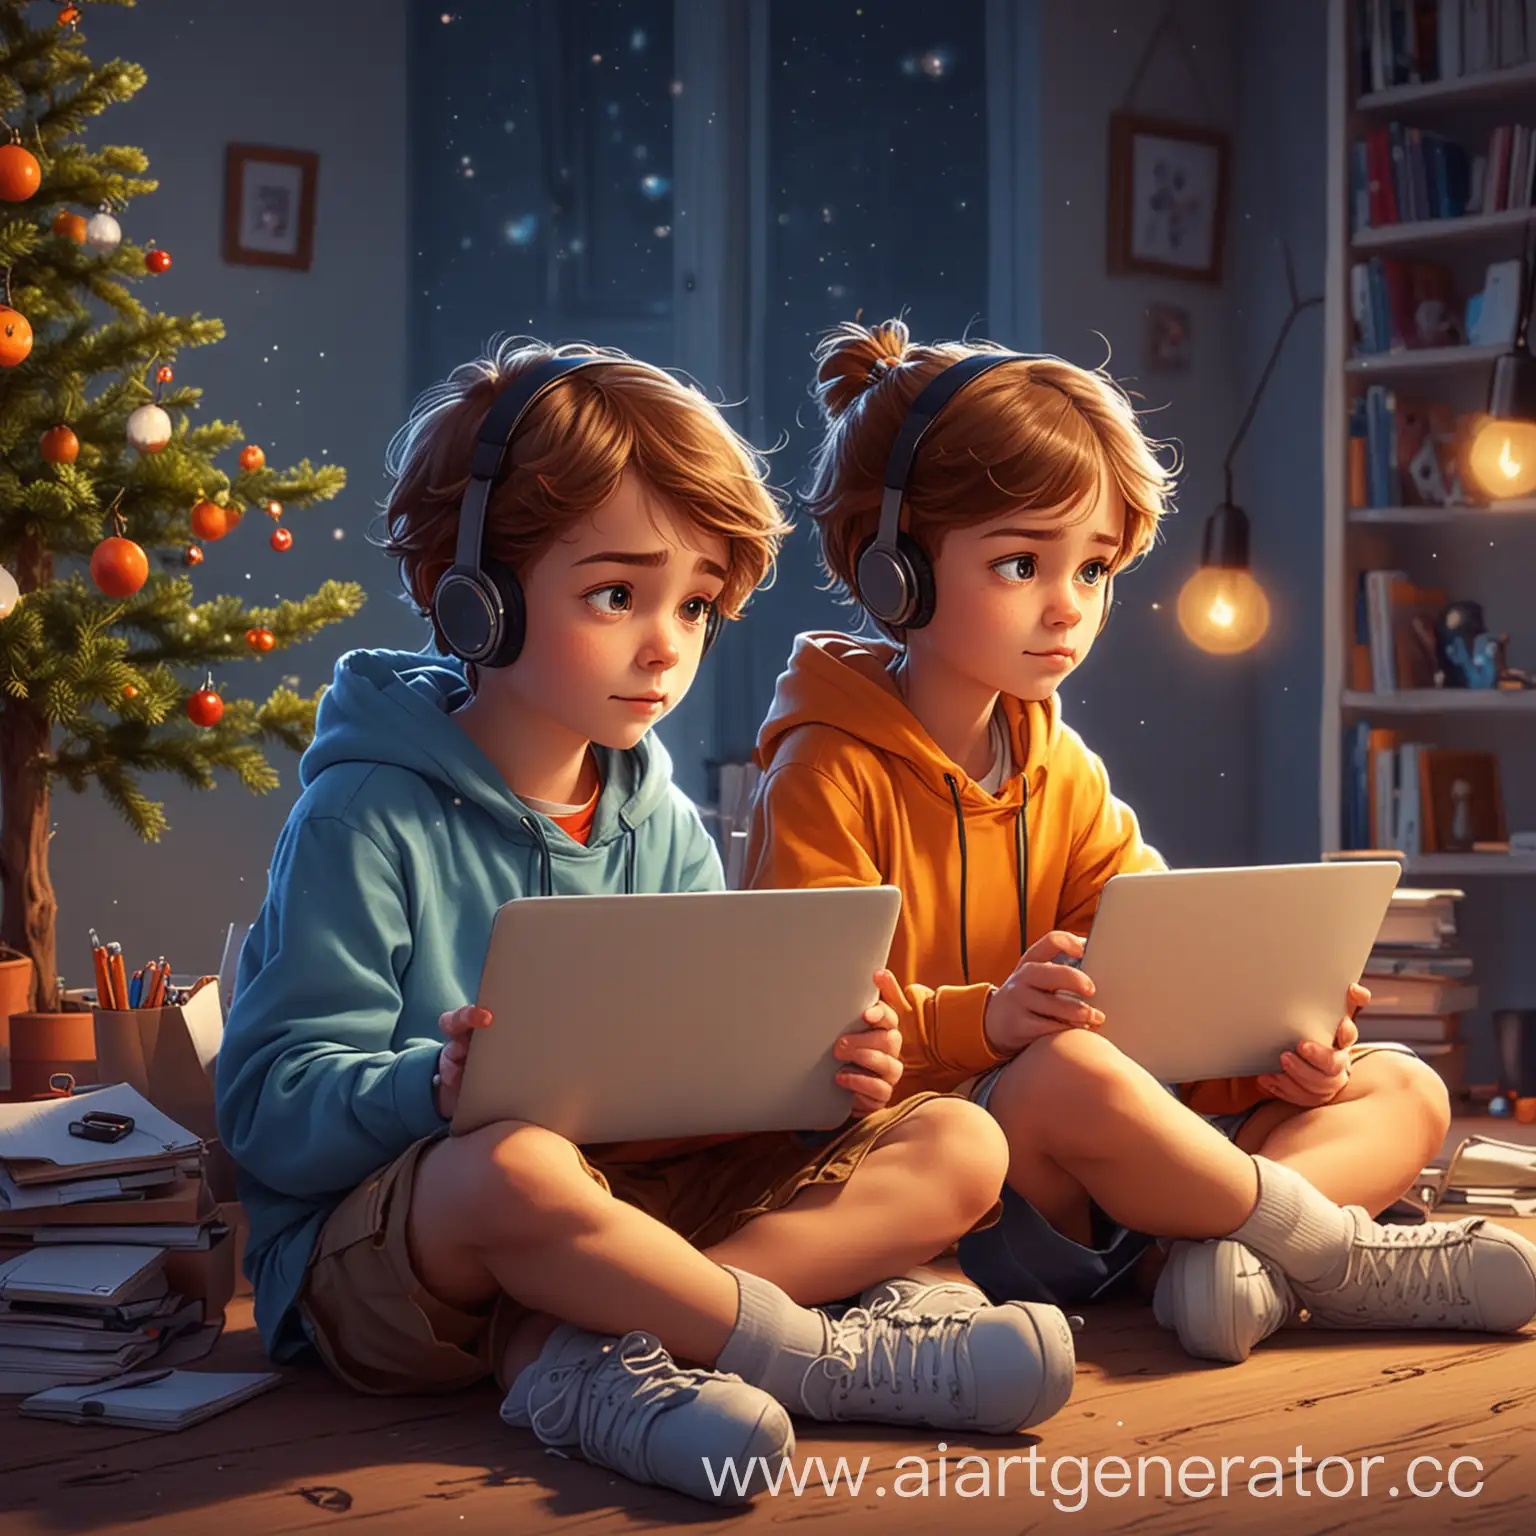 Joyful-Cartoon-Children-Exploring-Together-on-Electronic-Devices